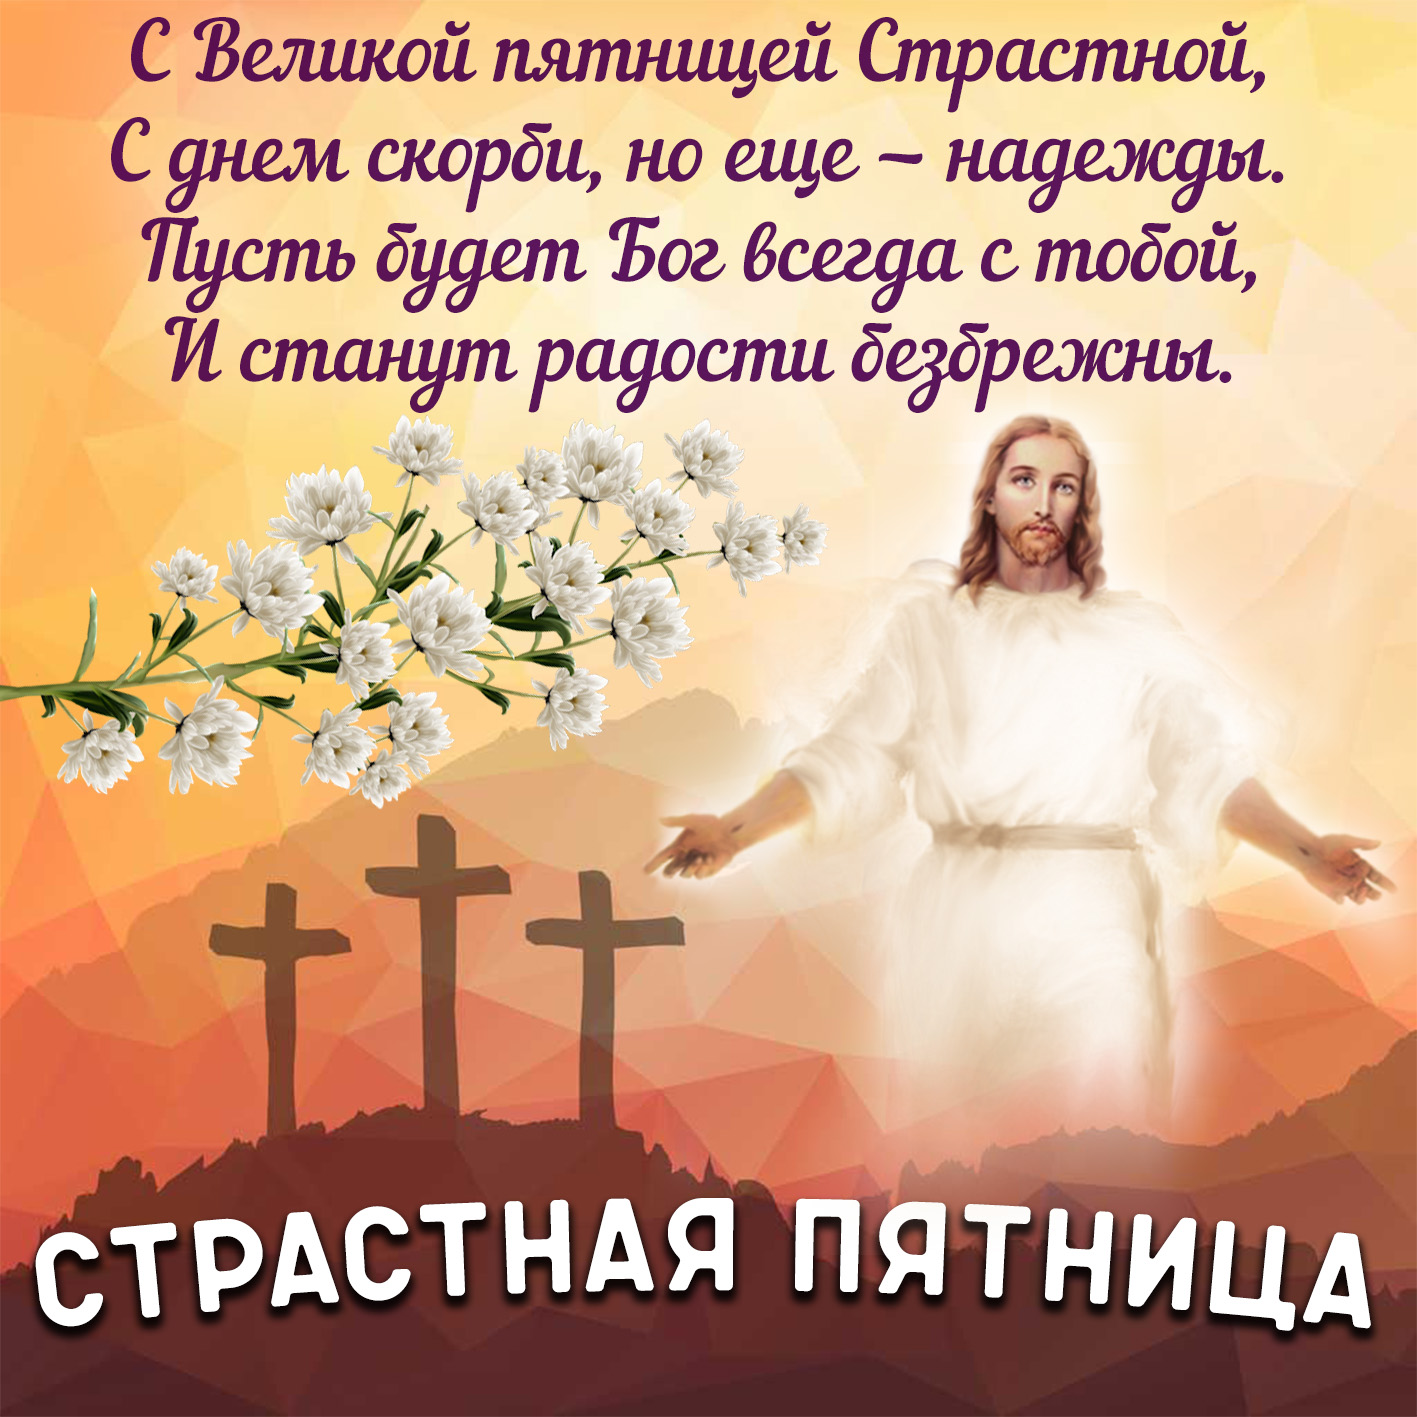 Православная открытка страстная пятница